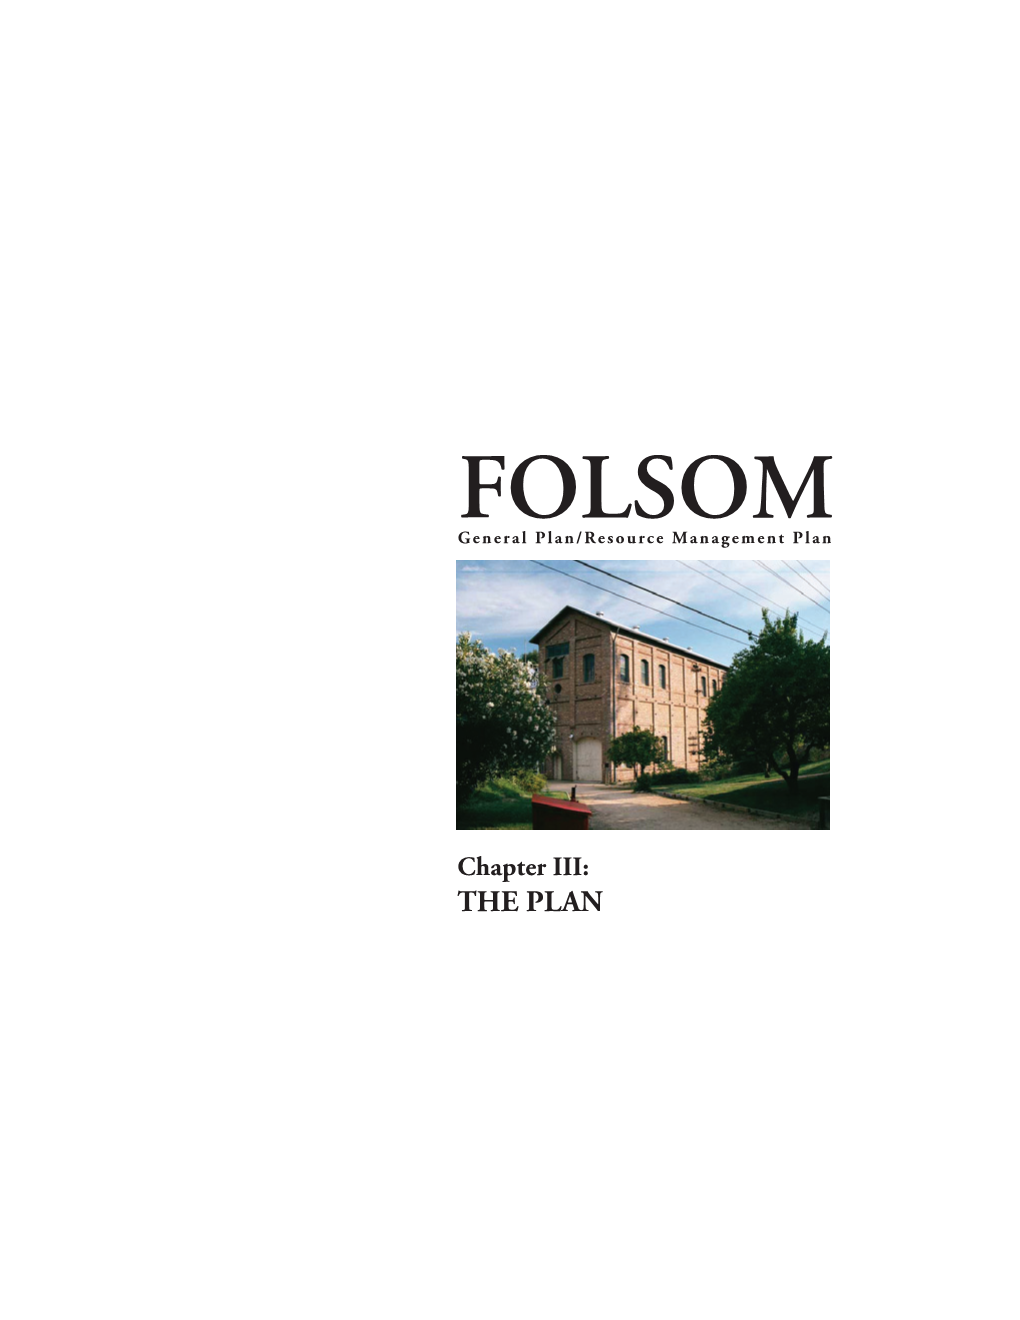 FOLSOM General Plan/Resource Management Plan